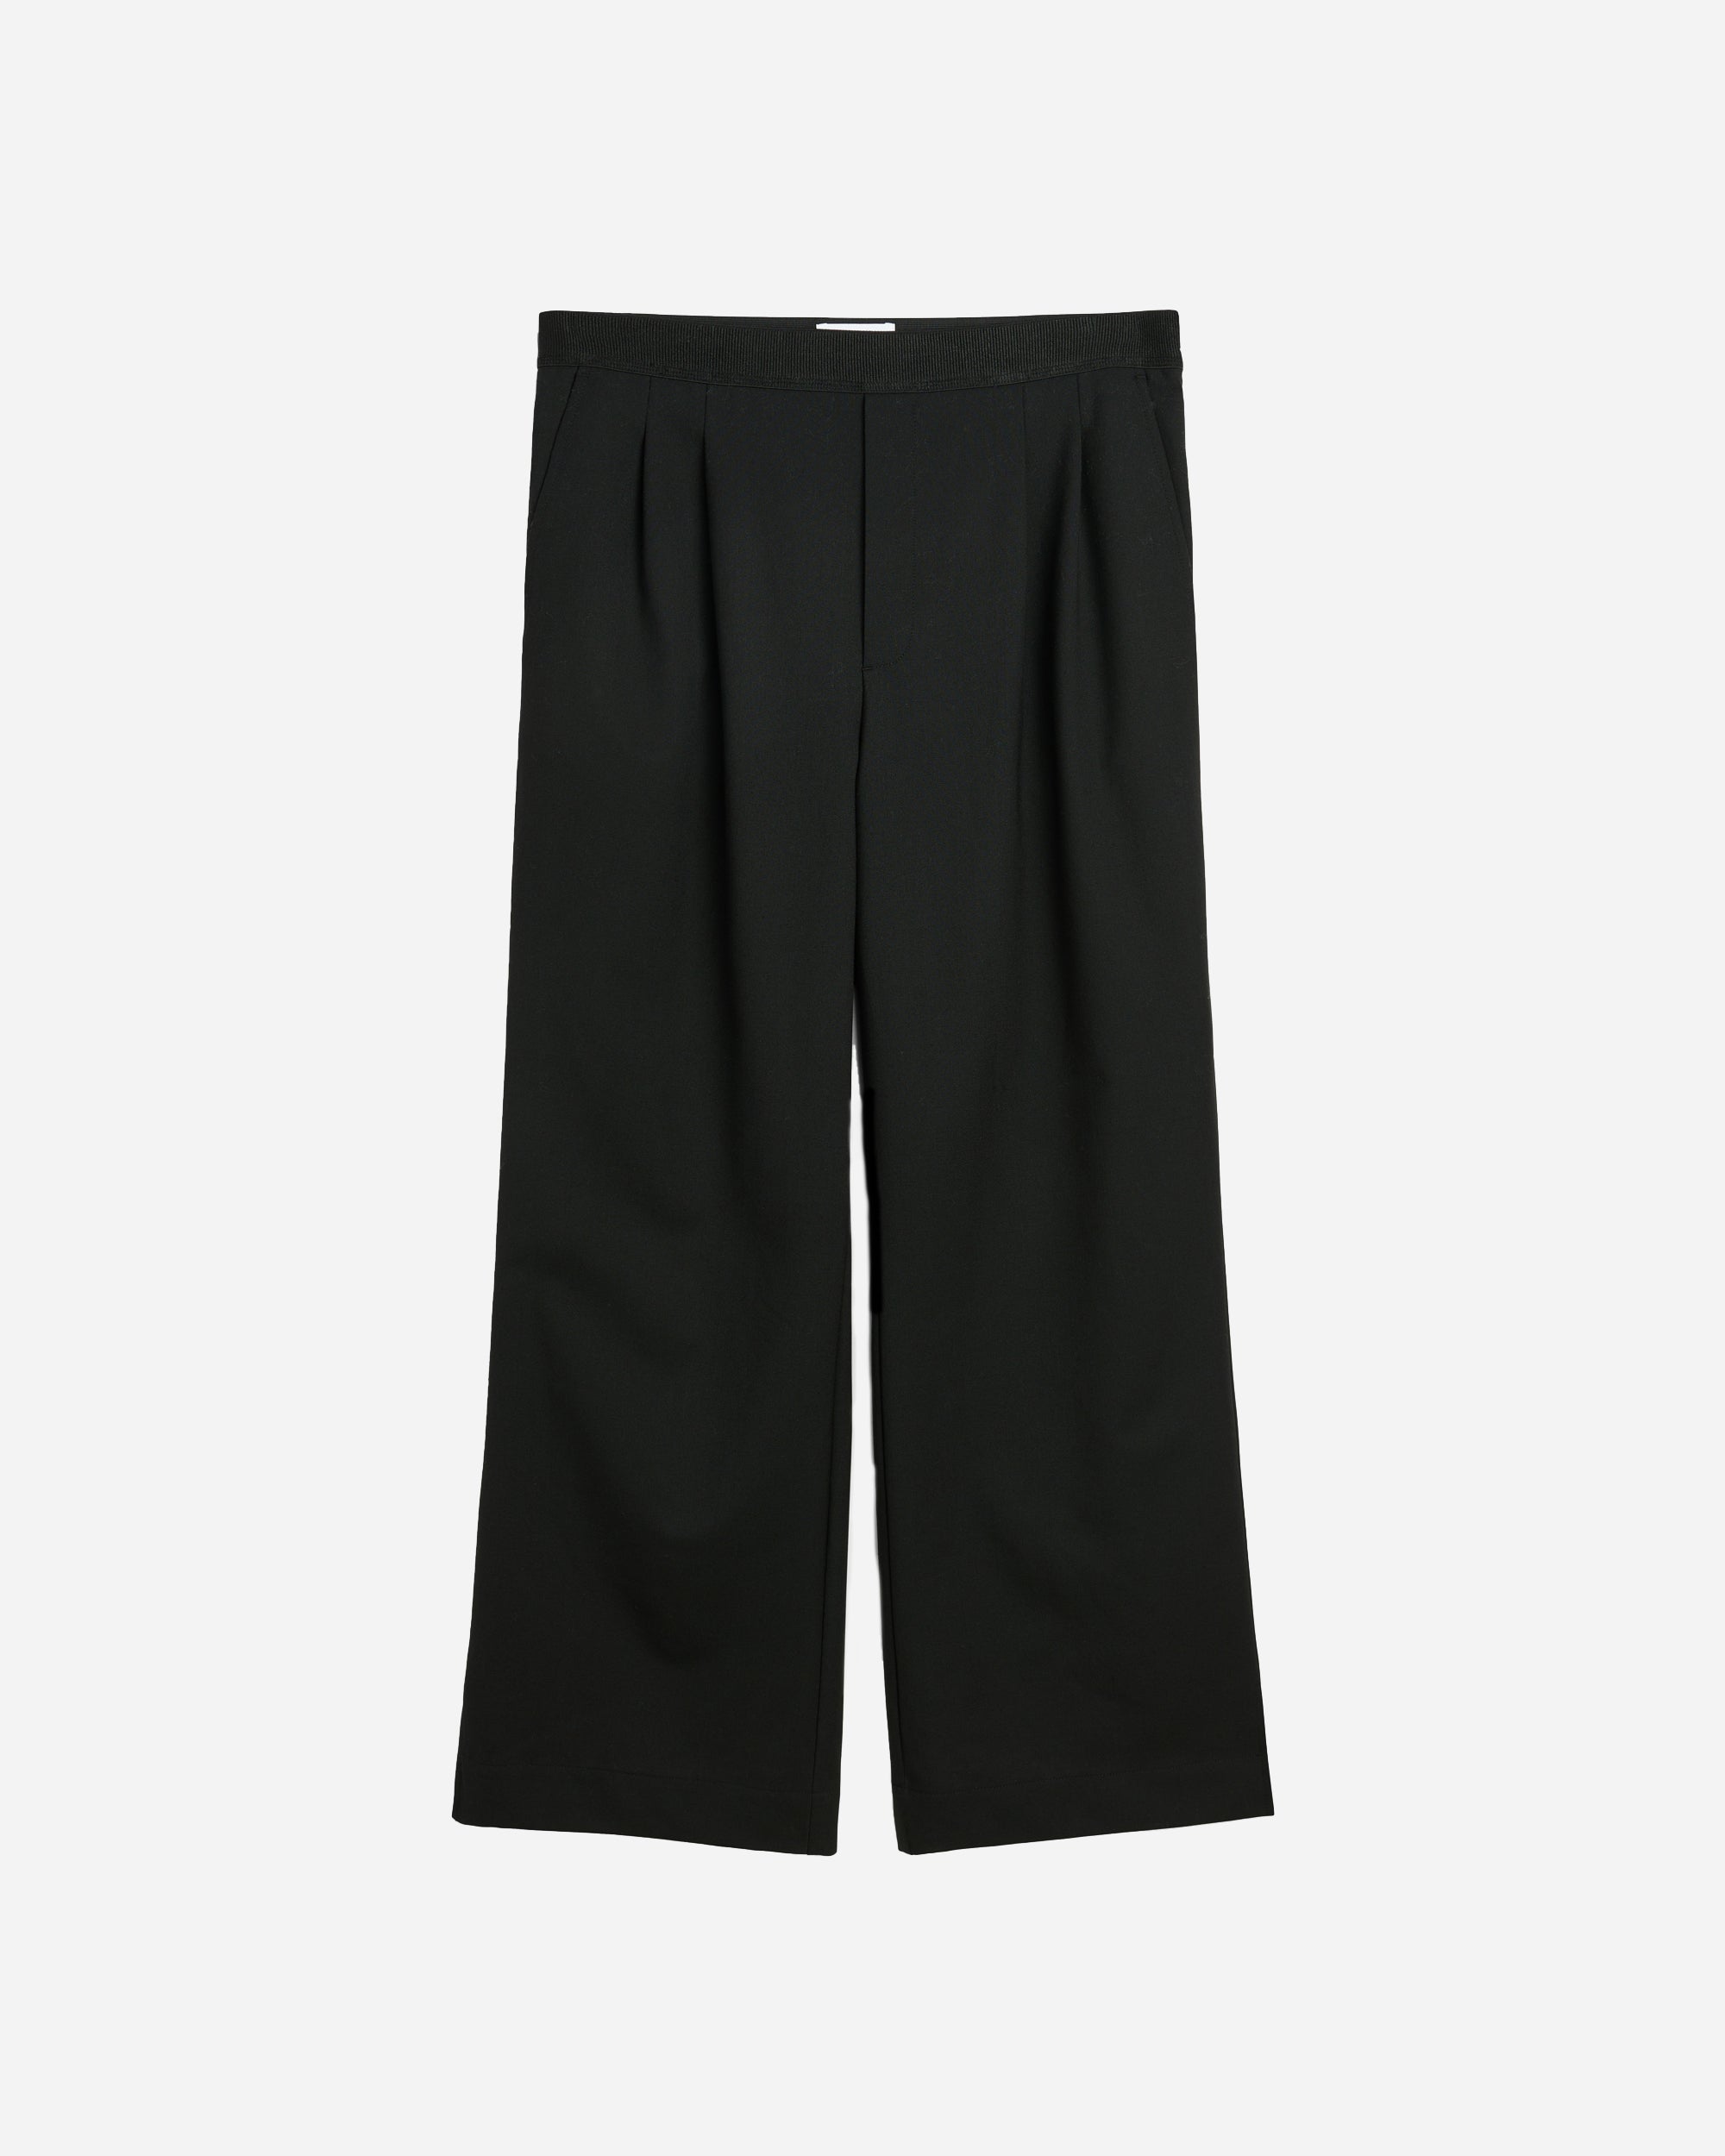 Soulland Demi pants Black   31019-1121